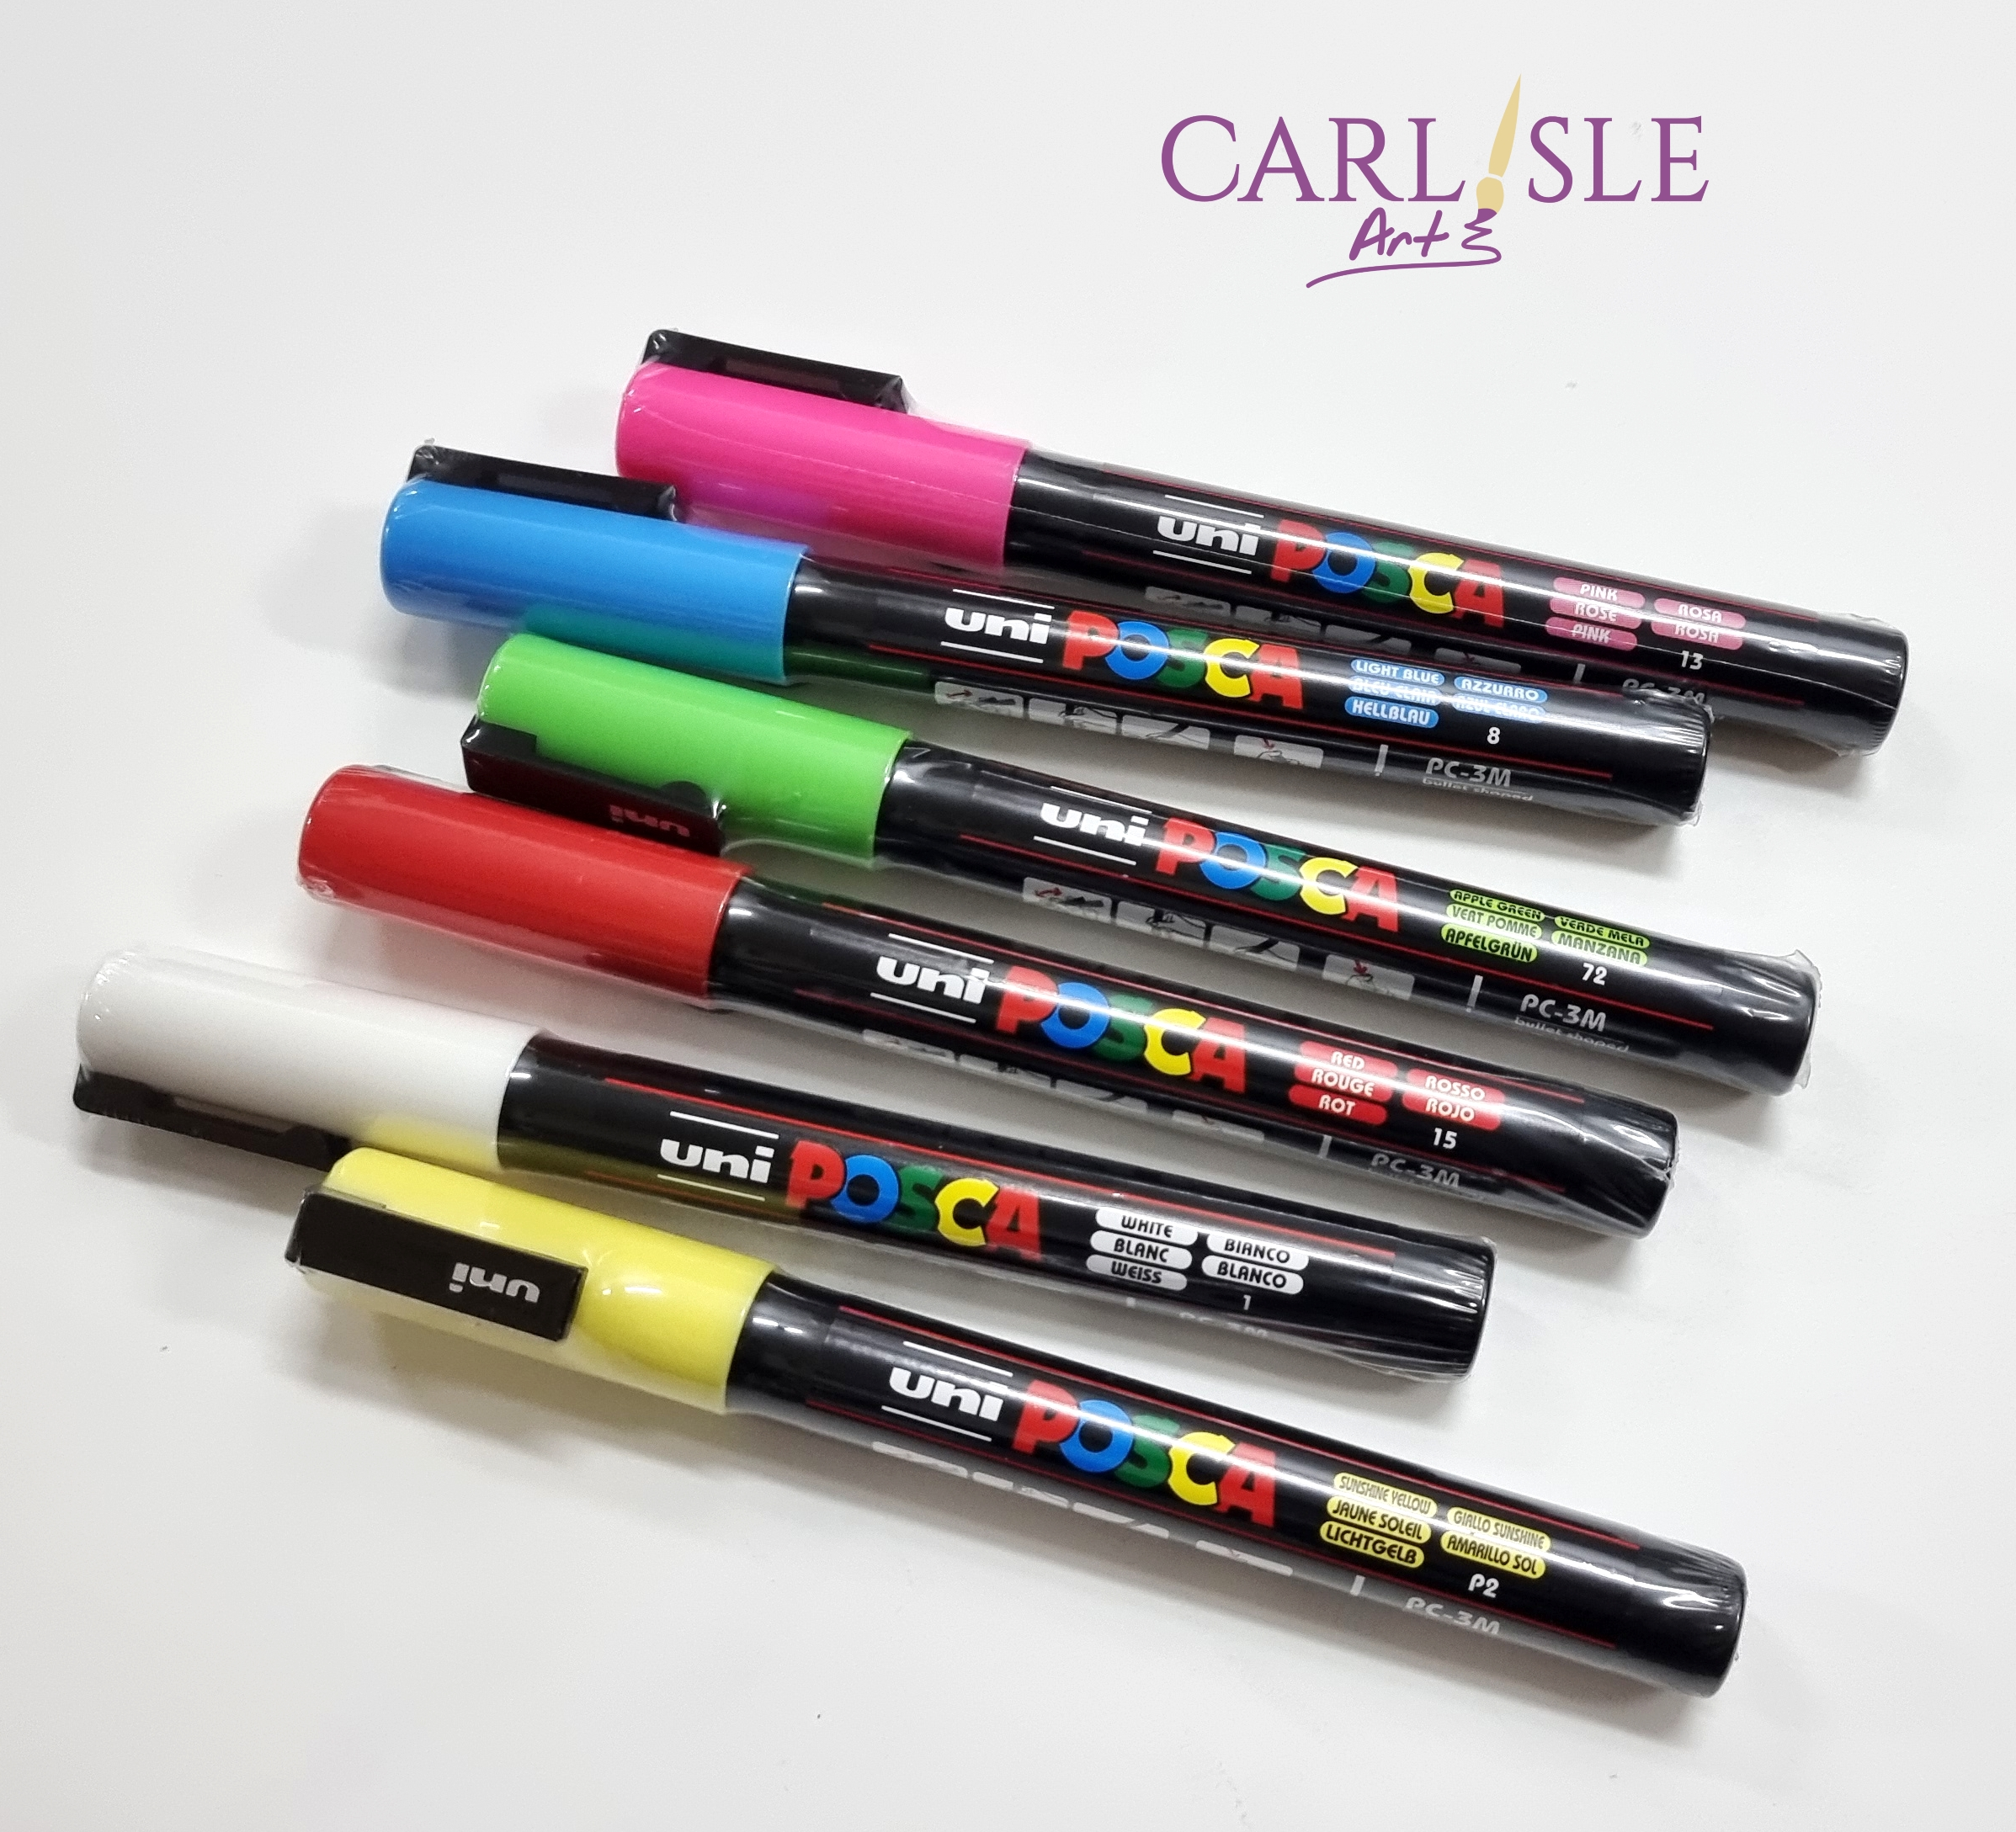 Kingart Soft Grip Gel Pen Set 12/Pkg-Assorted Colors